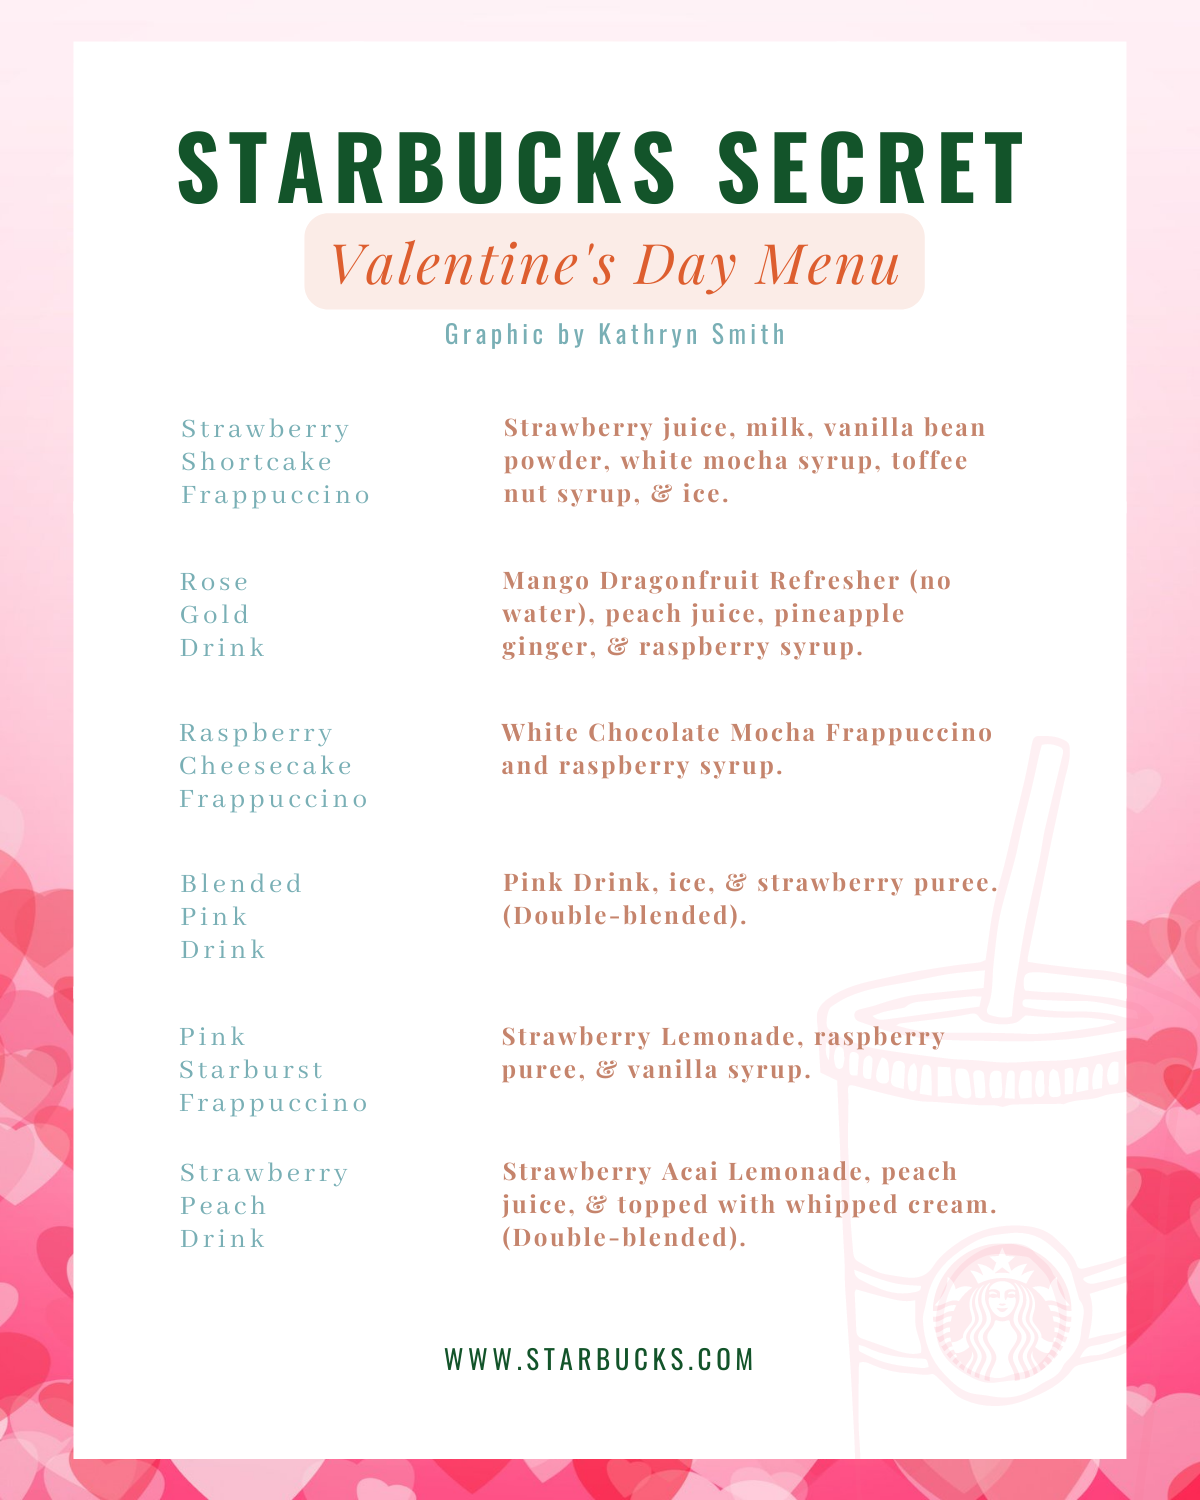 Starbucks Secret Valentine’s Day Menu The Bridge